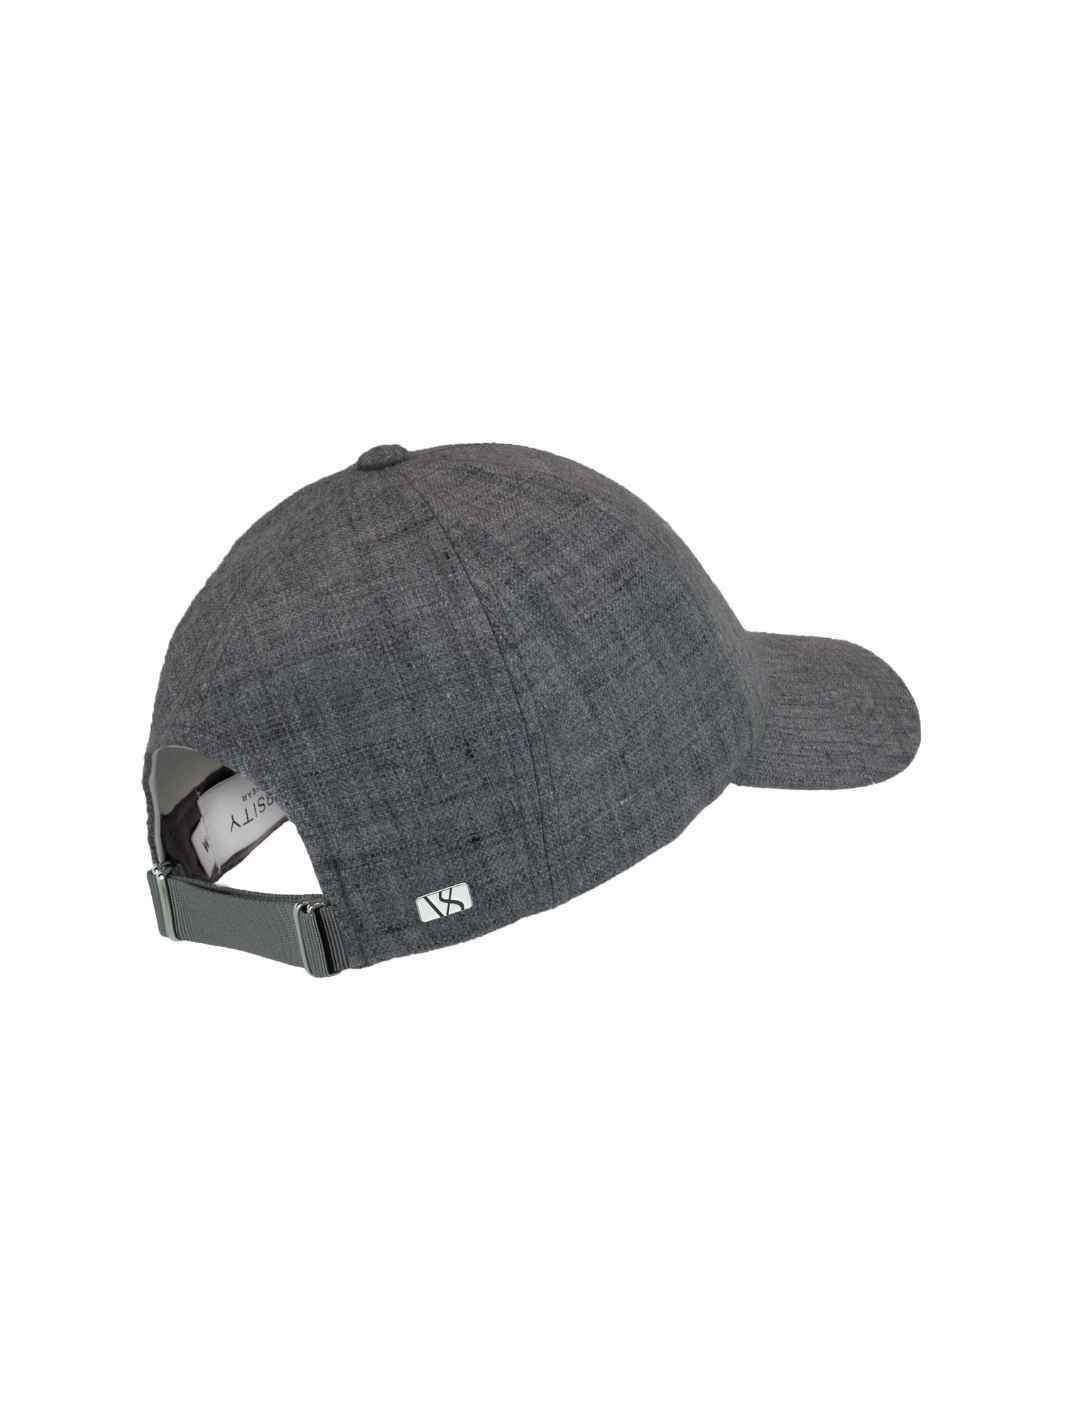 Varsity Headwear Accessories Cap | Pebble Grey Linen